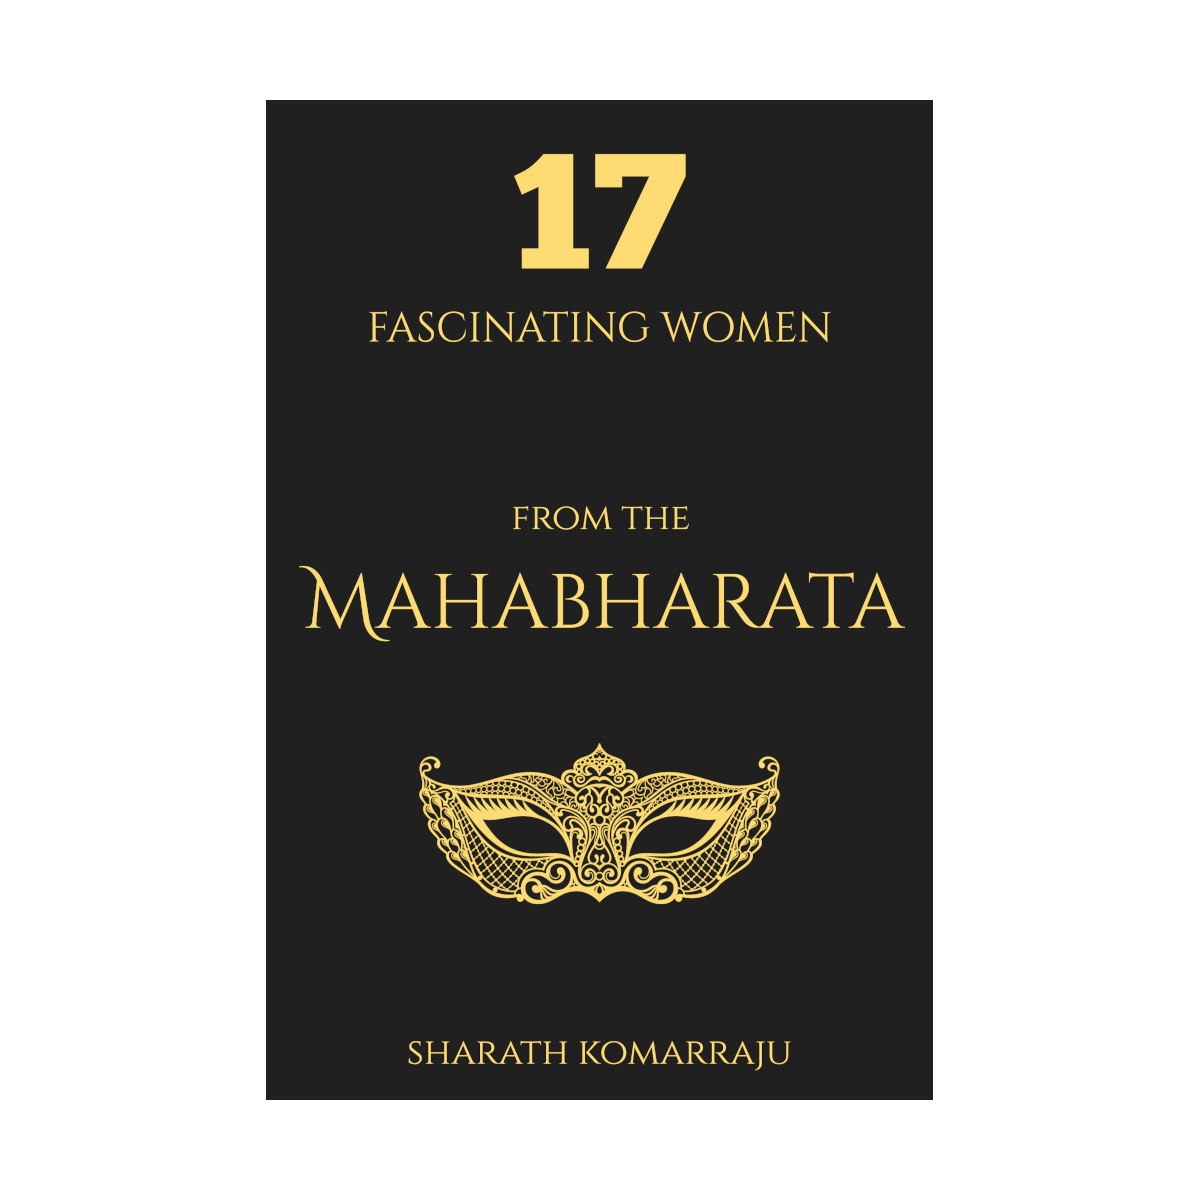 17 Fascinating Women from the Mahabharata